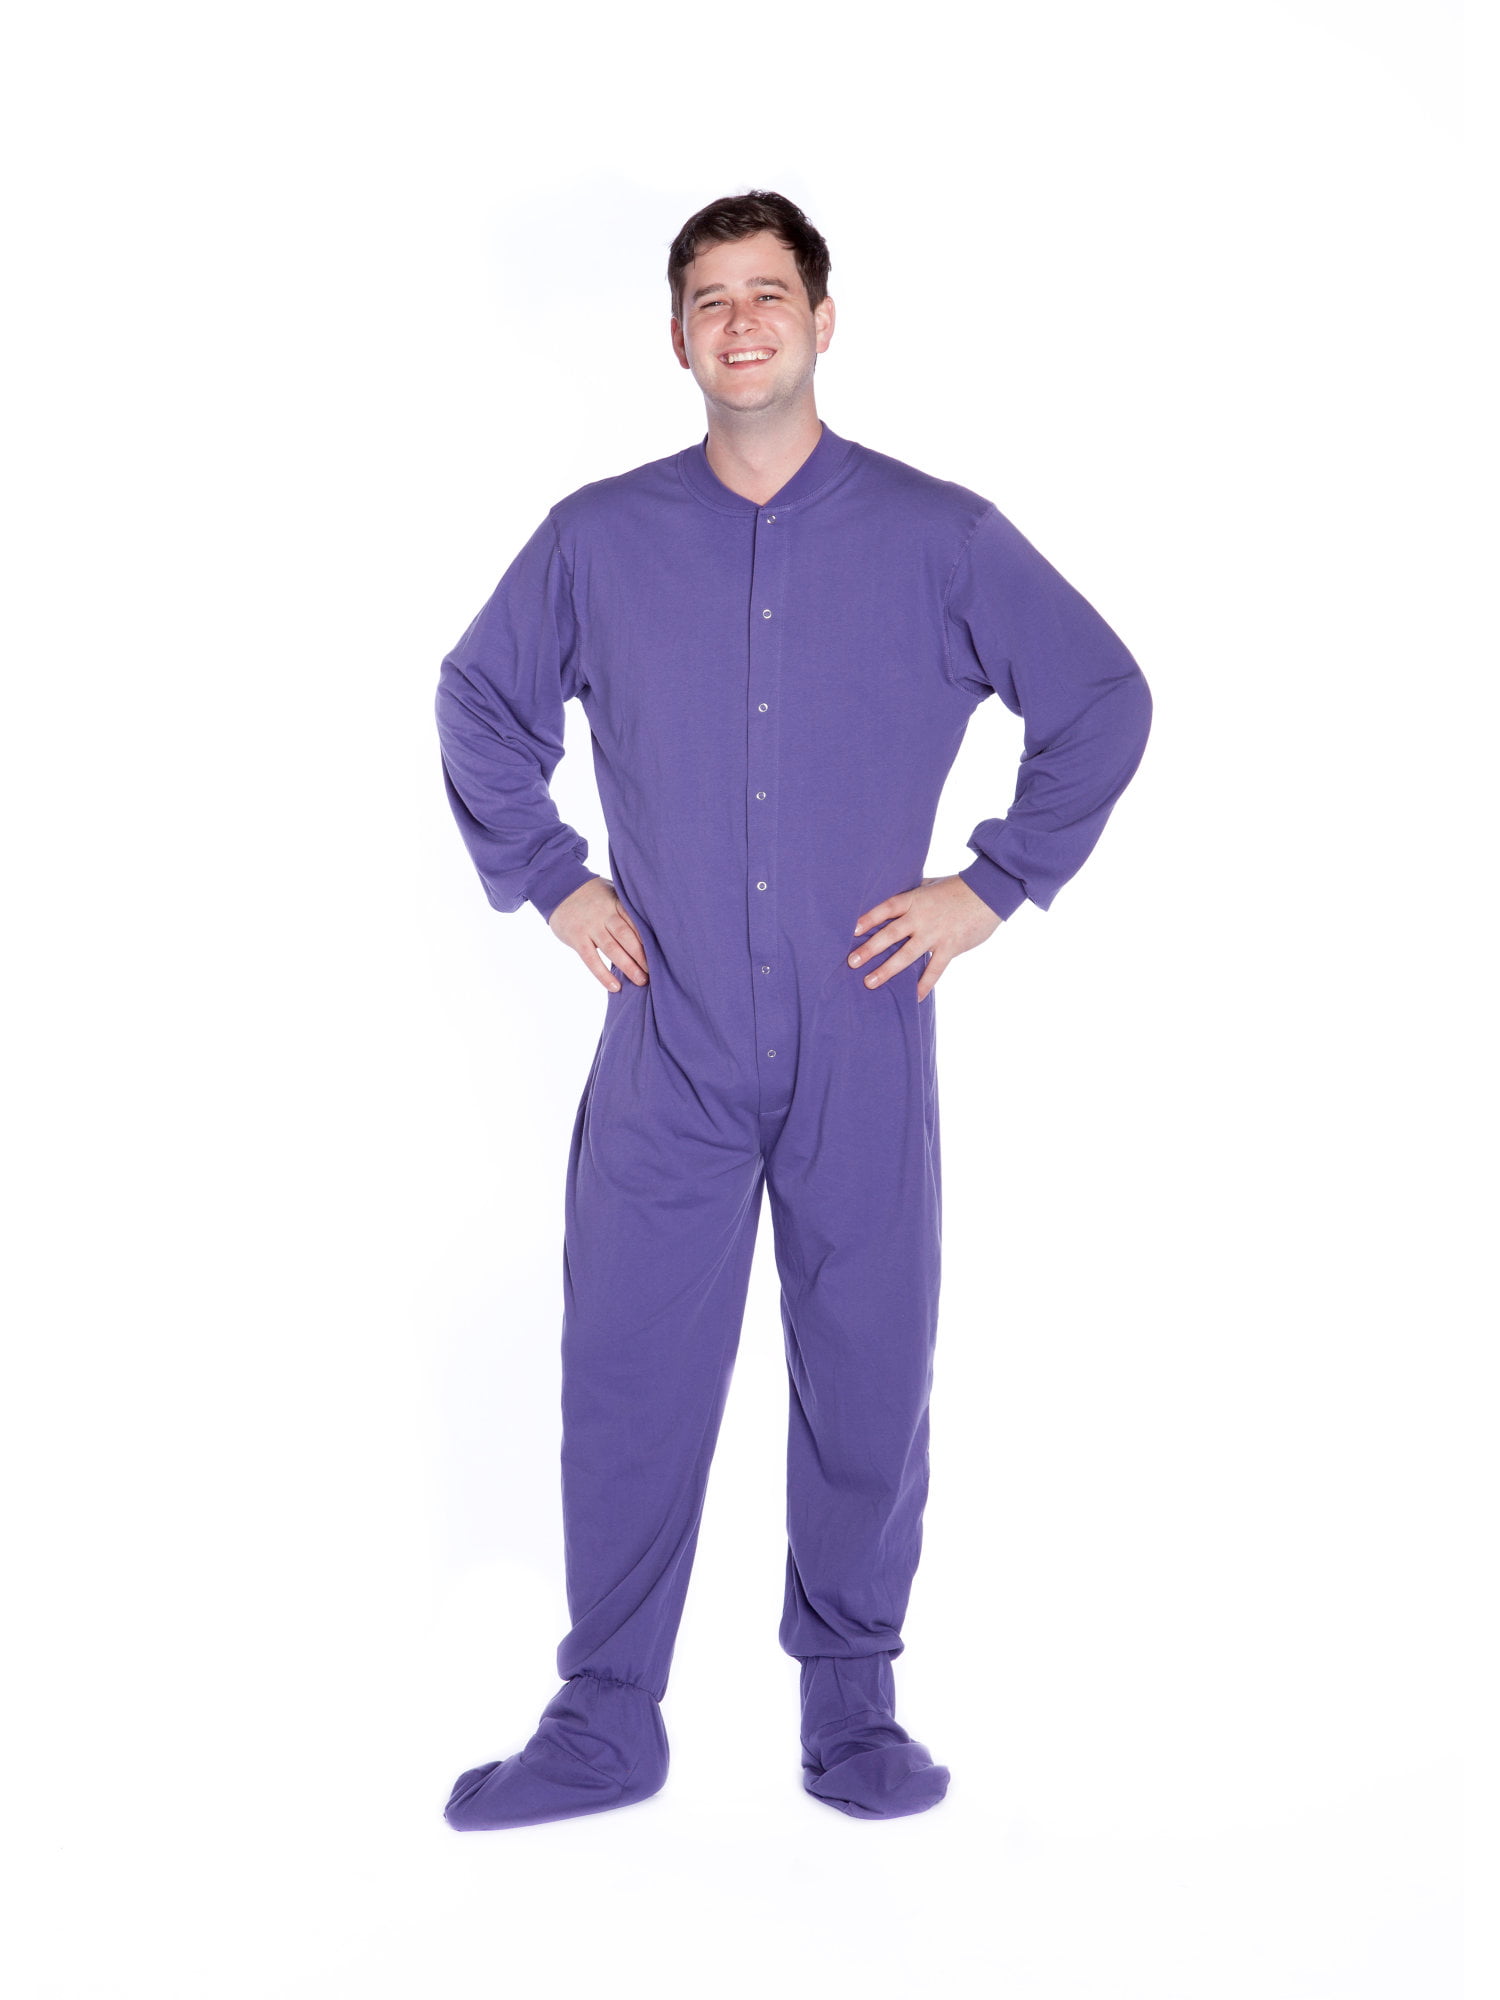 Big Feet Pjs Purple Jersey Knit Adult Footed Pajamas with Sleeper Rear Flap 